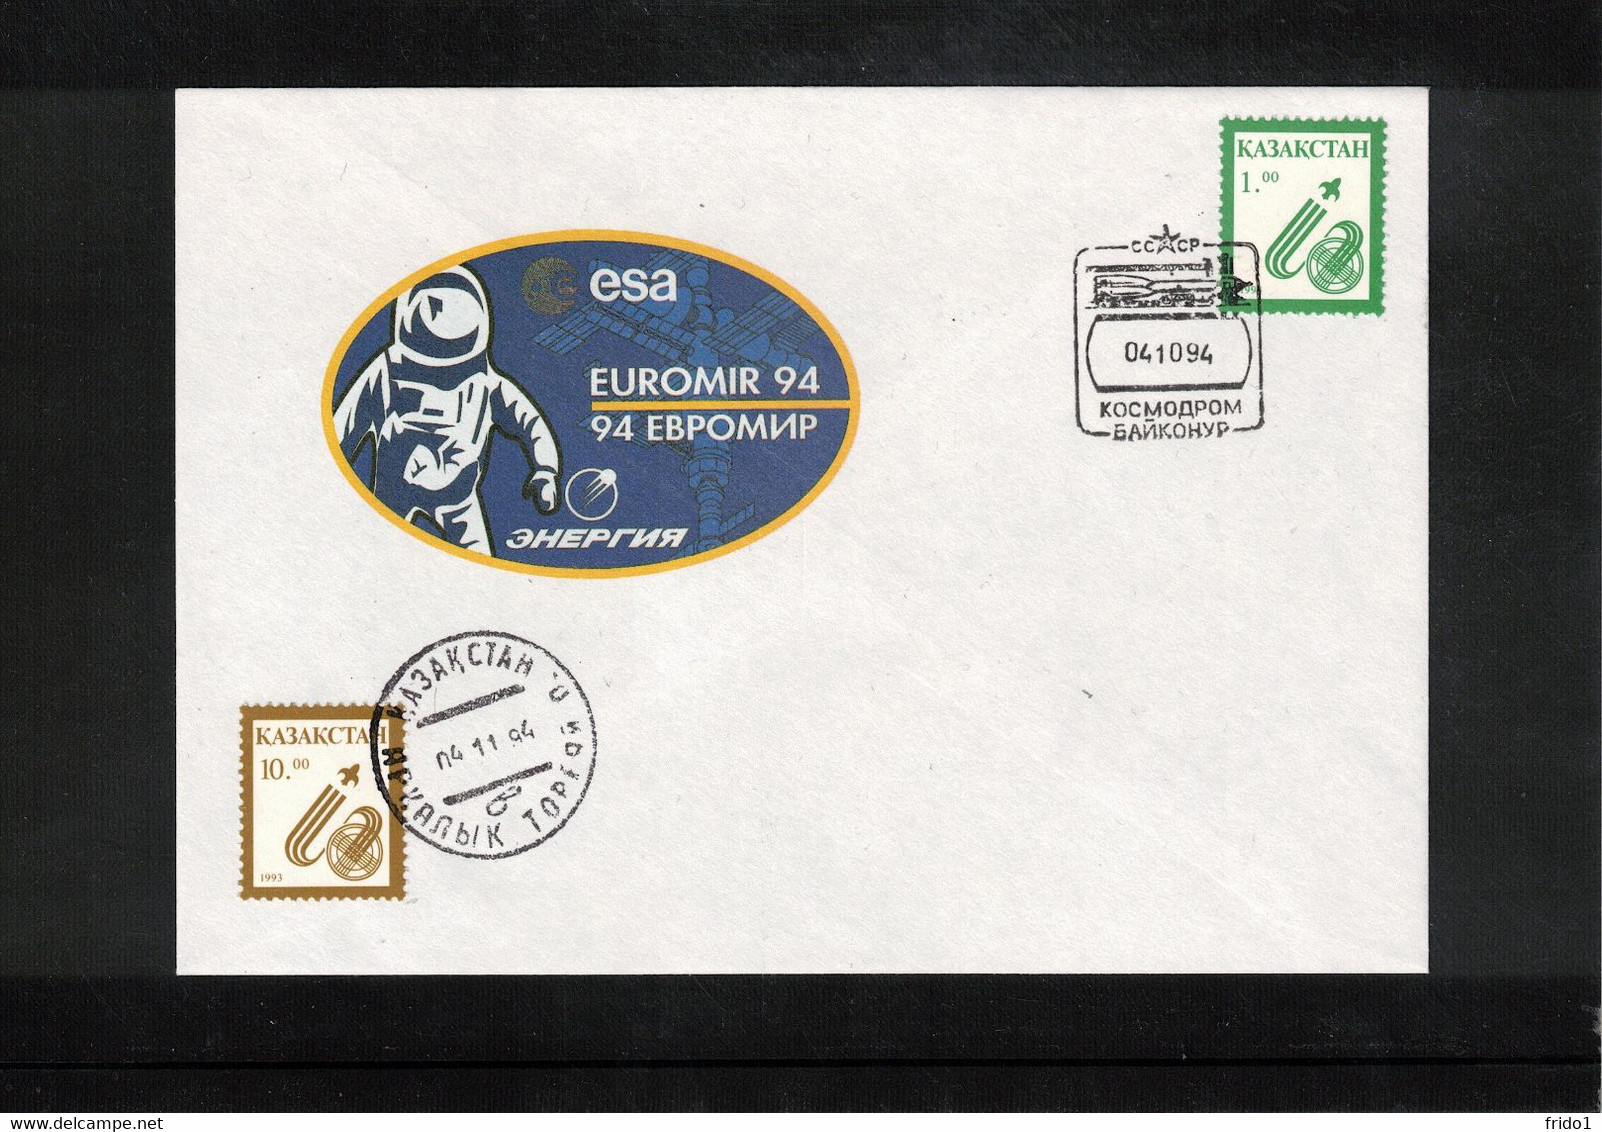 Kazakhstan 1994 Space / Raumfahrt Interesting Letter - Asia